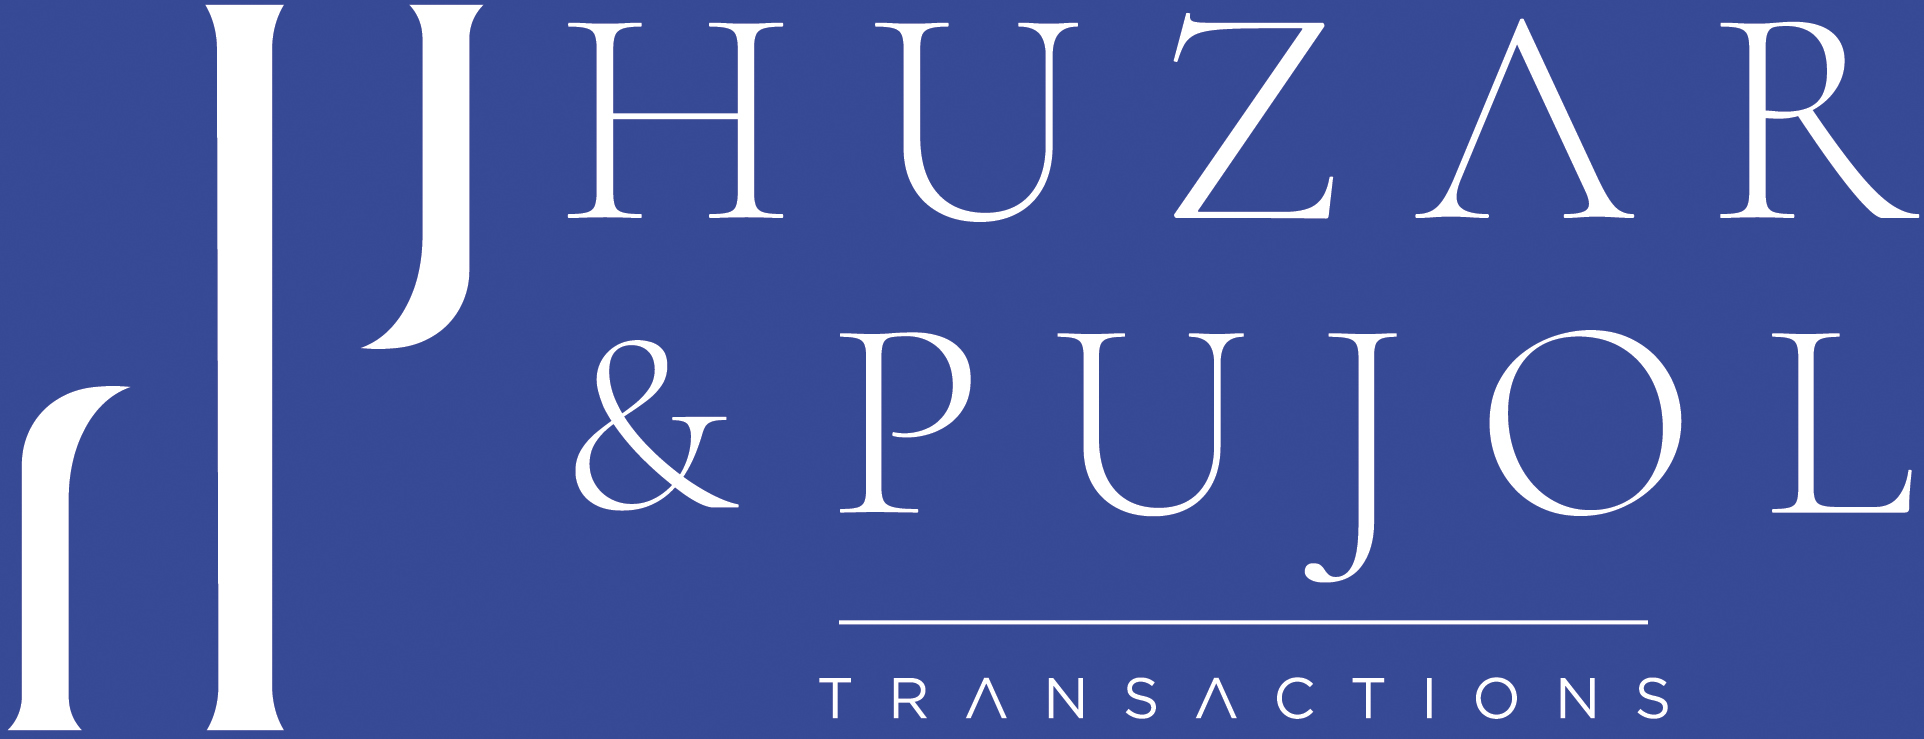 Accueil Huzar & Pujol transactions